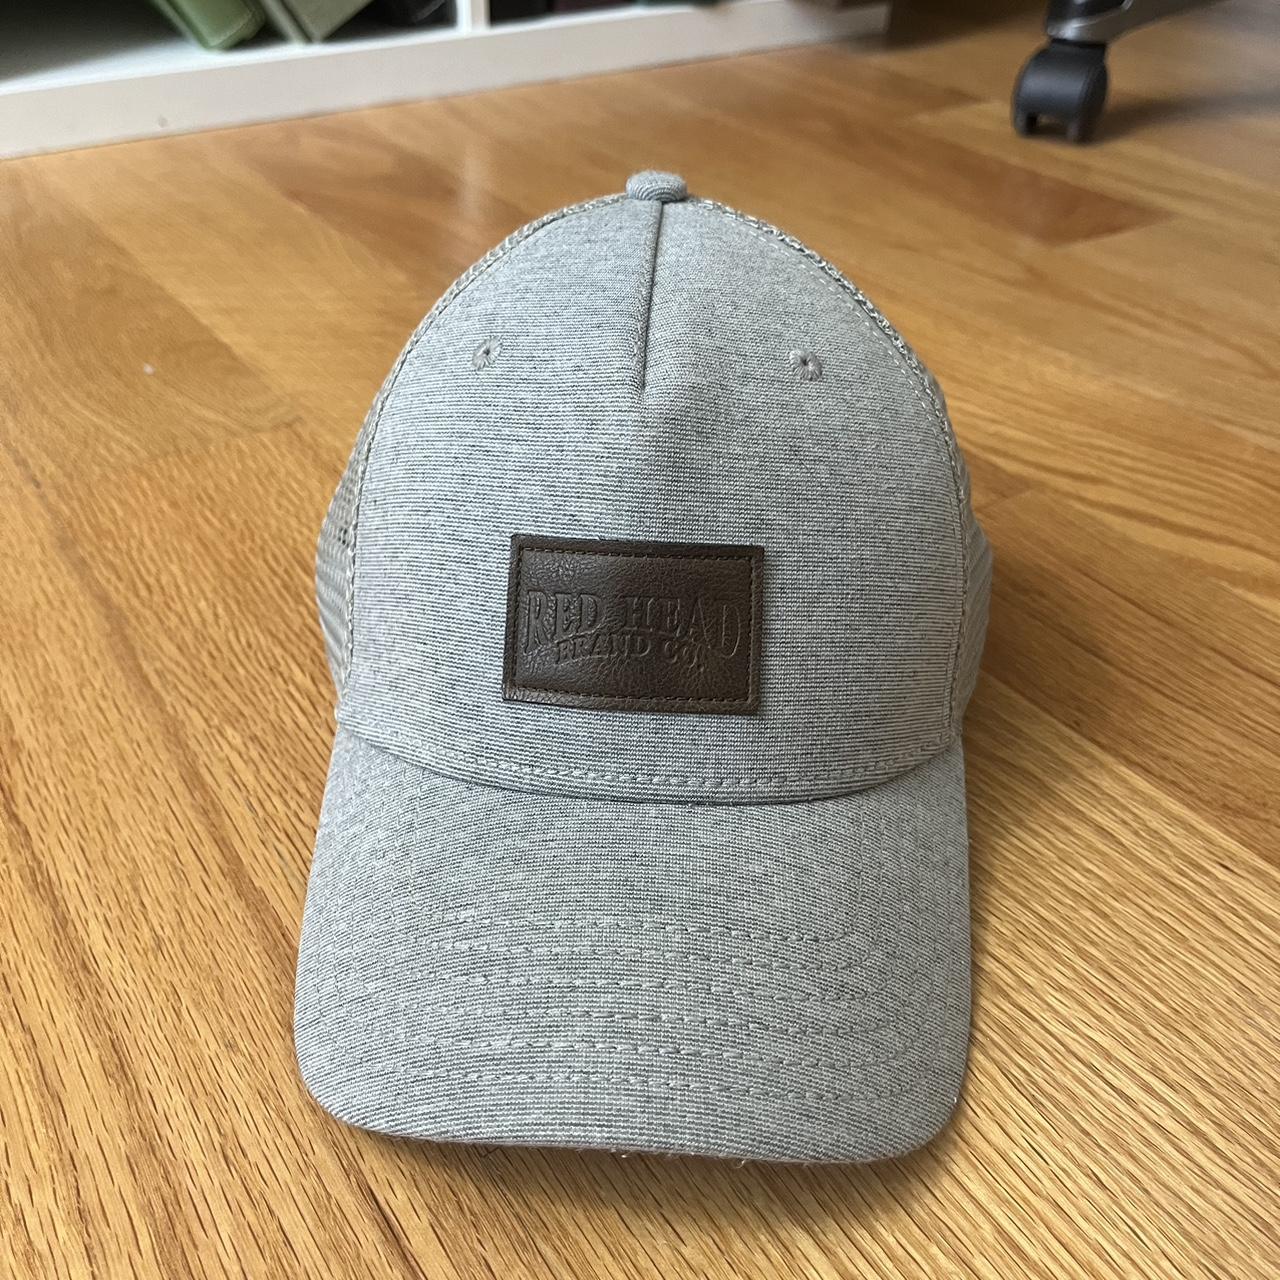 Red Head Brand Co. Trucker/Fishing Hat Super clean - Depop